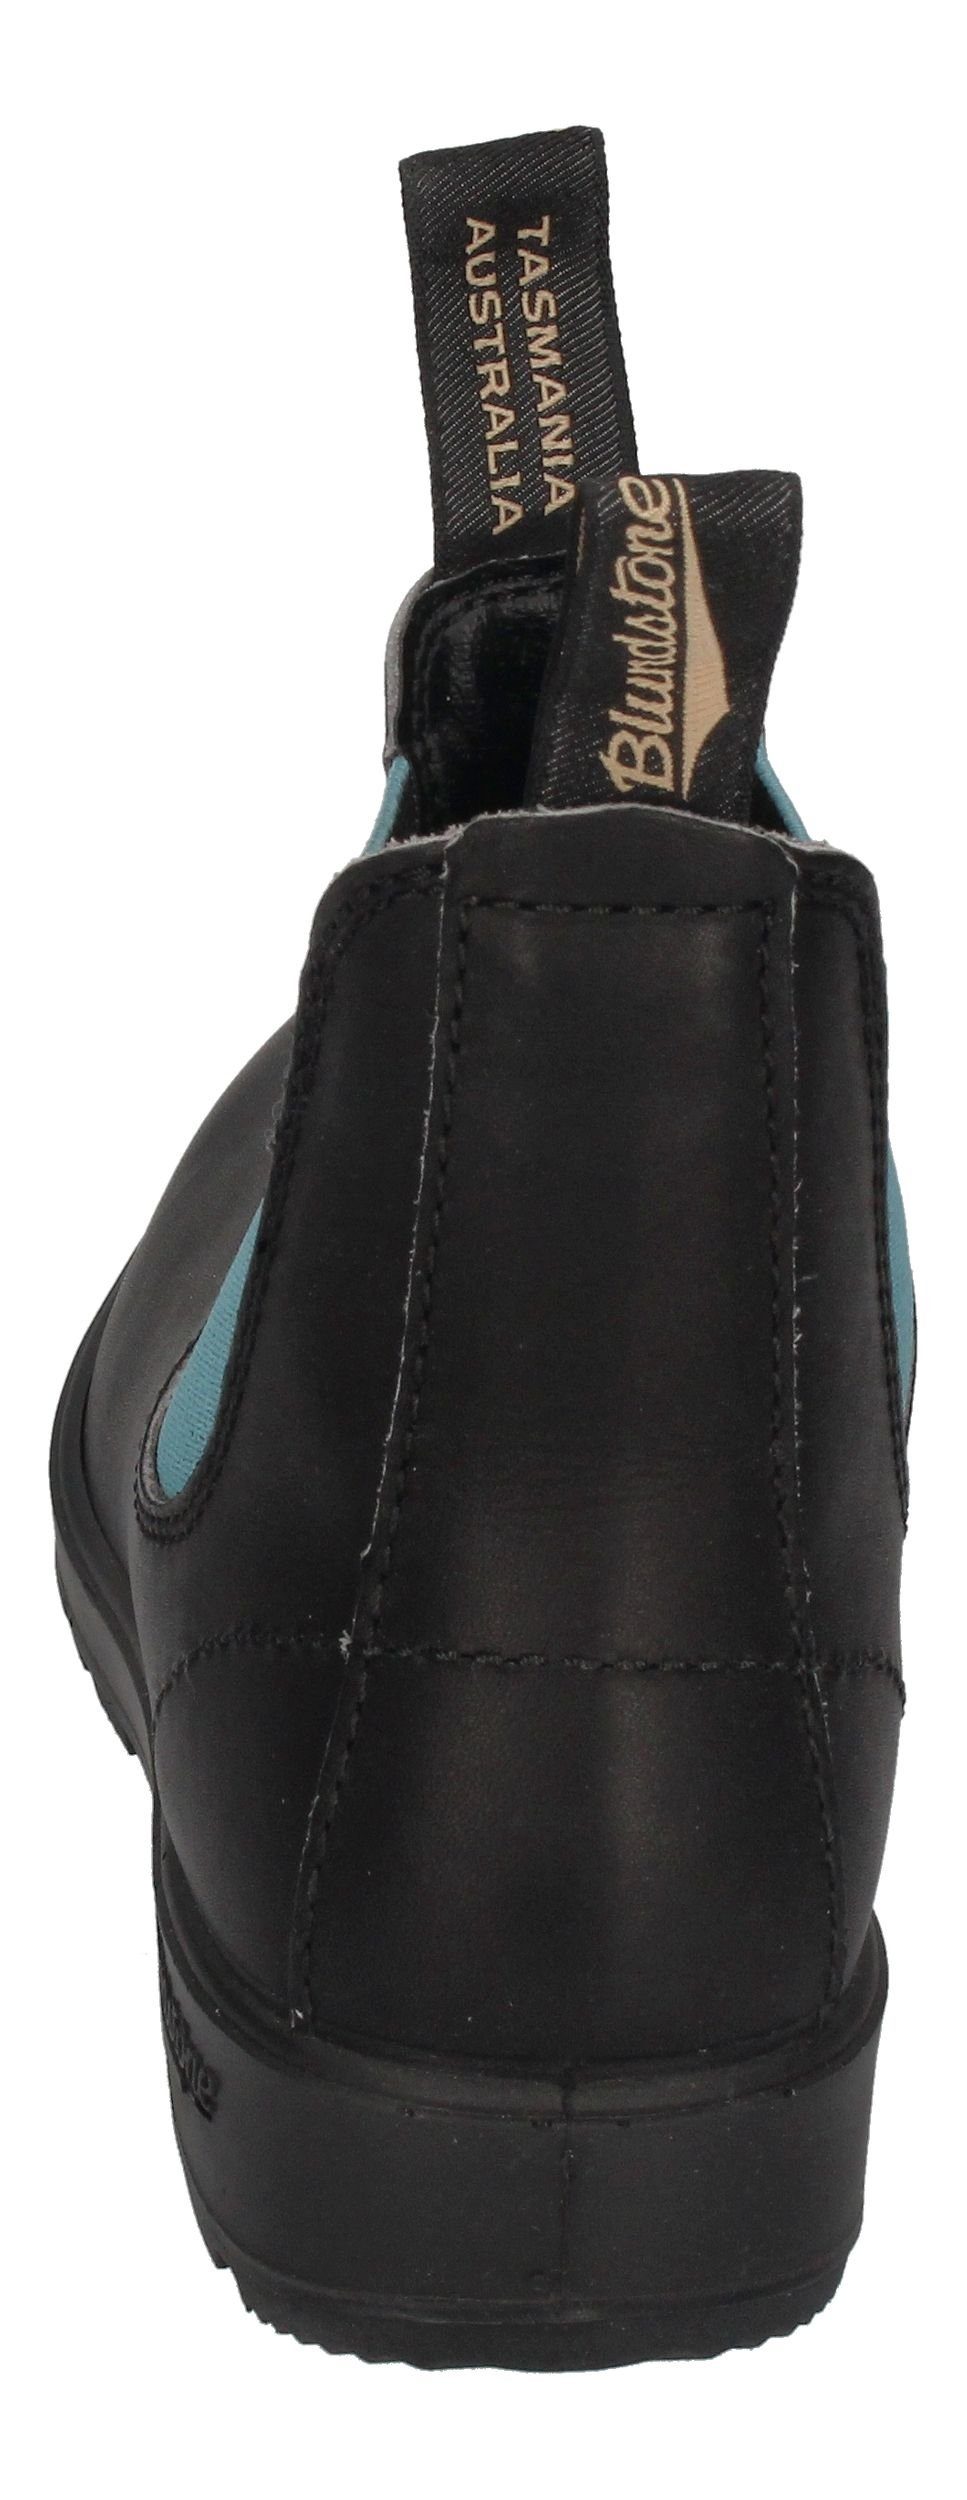 Elastic BLU2207-001 Black Series Original Leather Chelseaboots Teal 500 Blundstone with